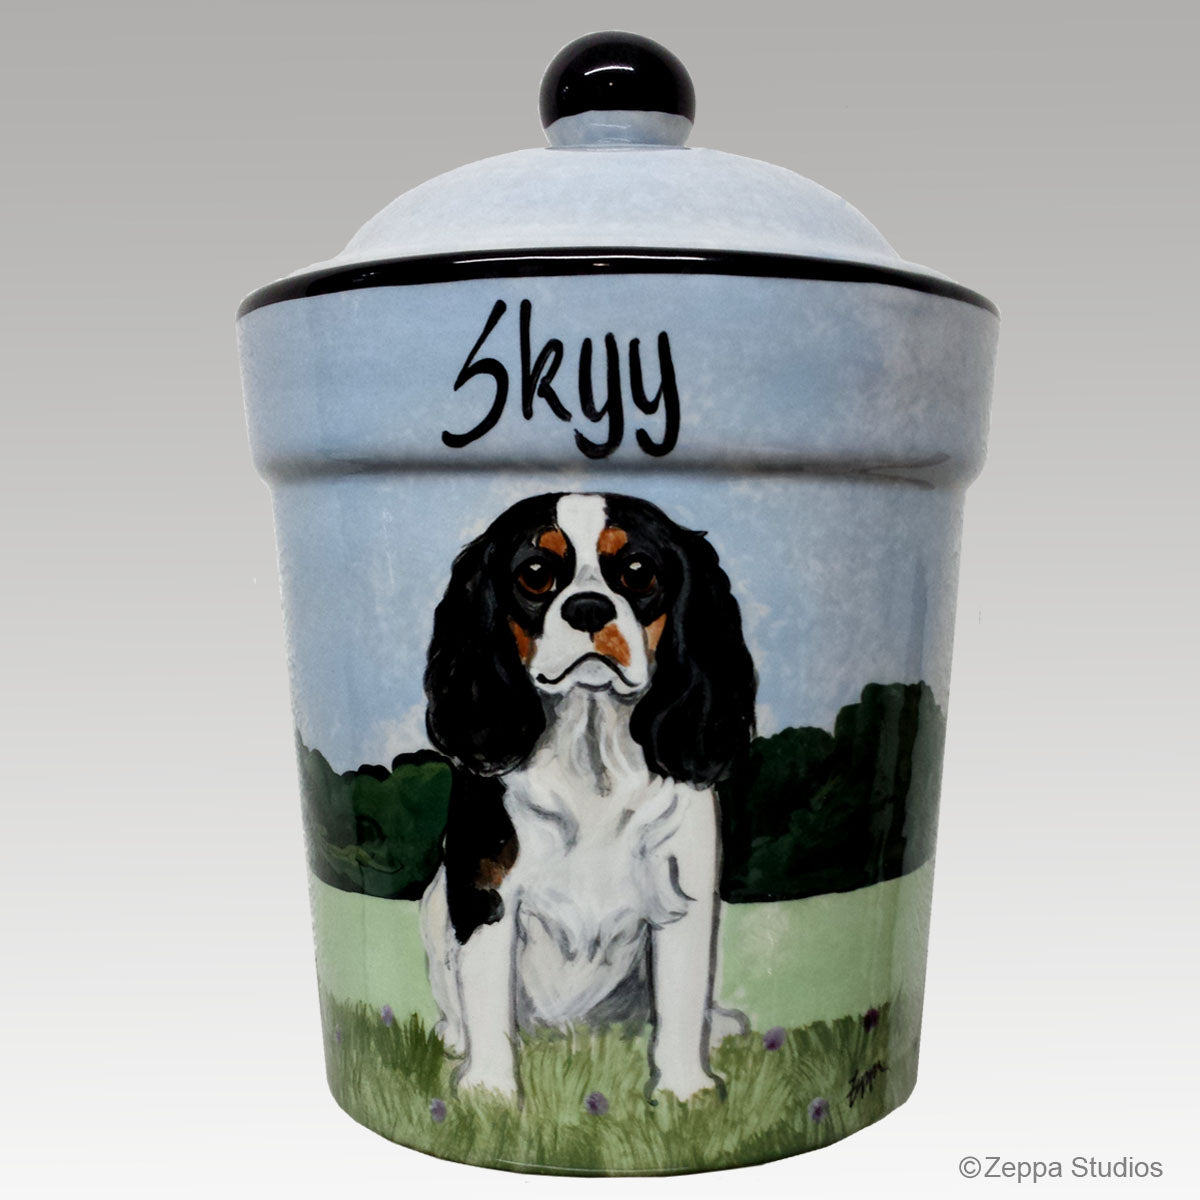 Custom Hand Painted Ceramic Treat Jar, Skyy by Zeppa Studios